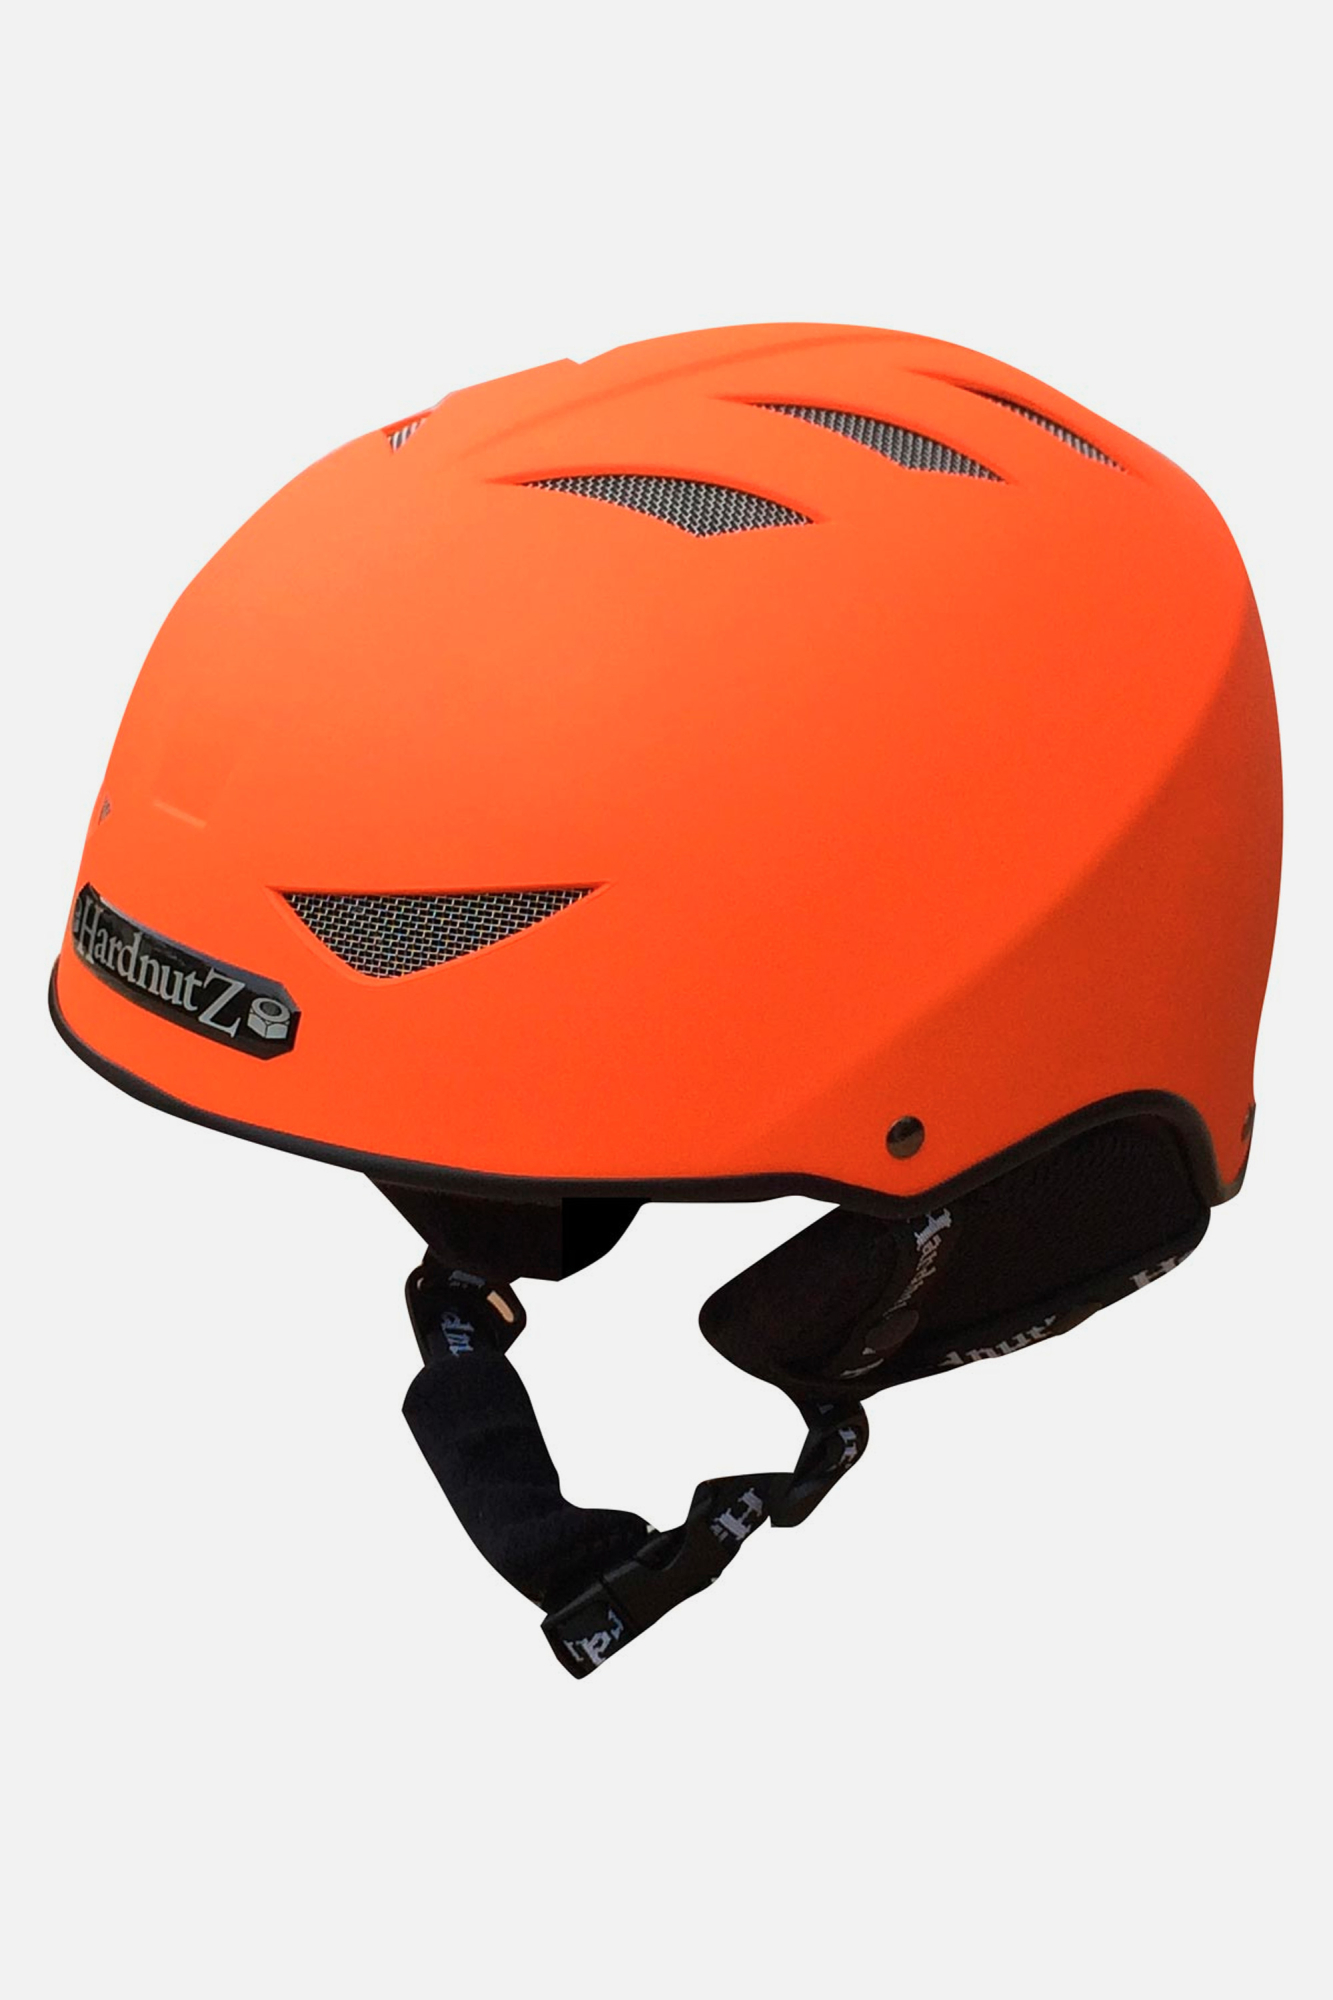 Hardnutz Rubber Helmet Orange - Size: Large